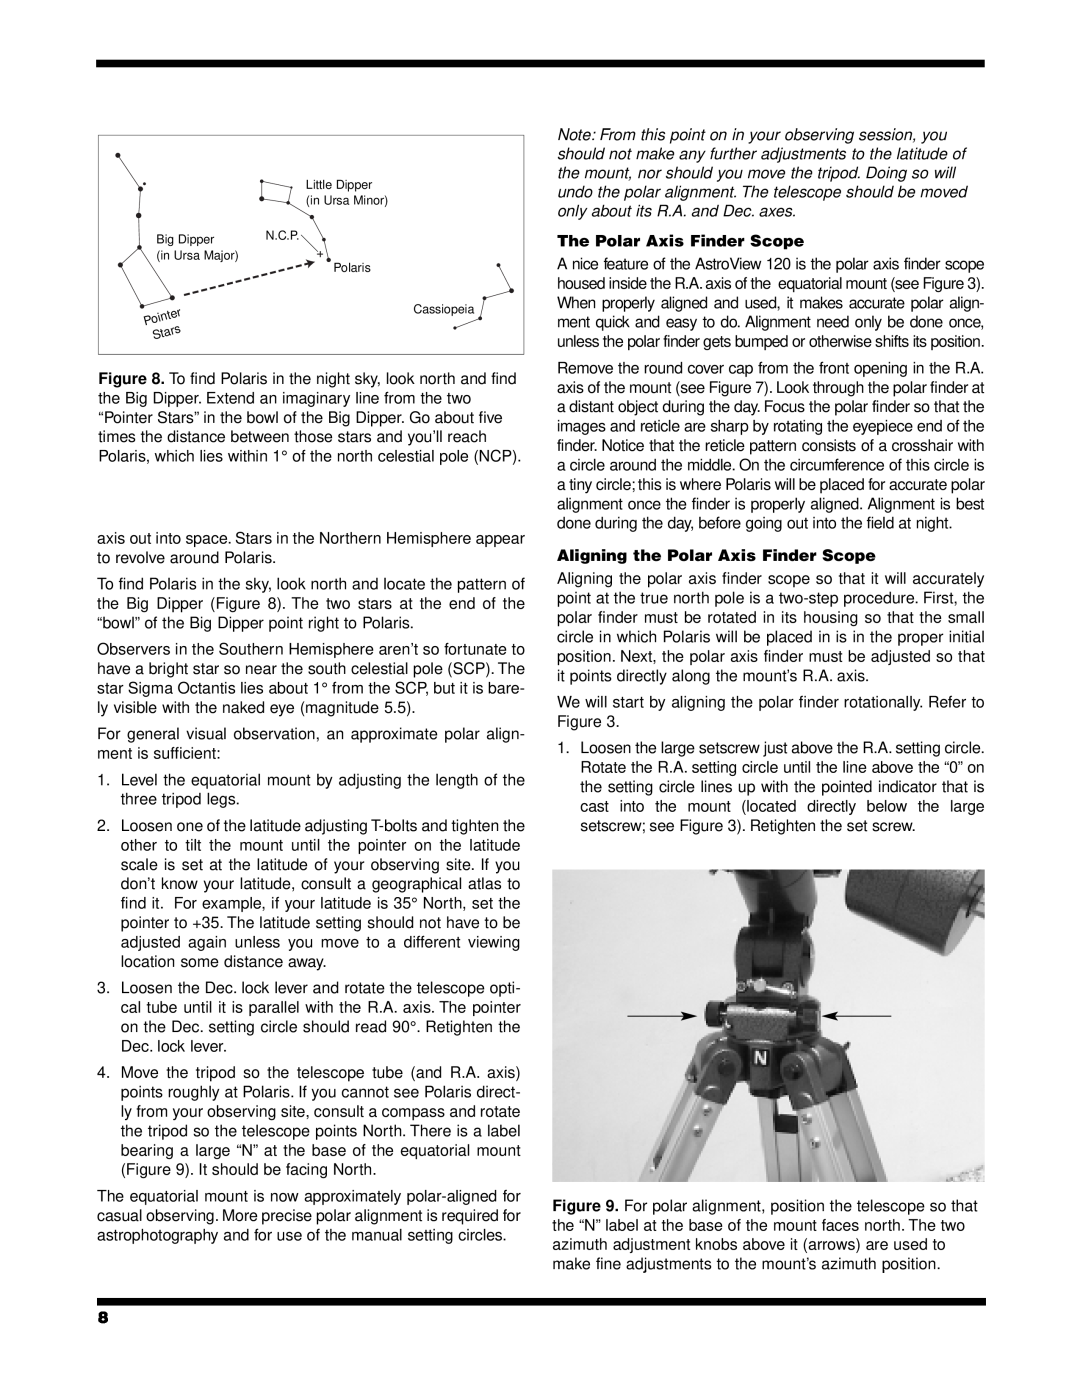 Orion 120 EQ instruction manual The Polar Axis Finder Scope, Aligning the Polar Axis Finder Scope 